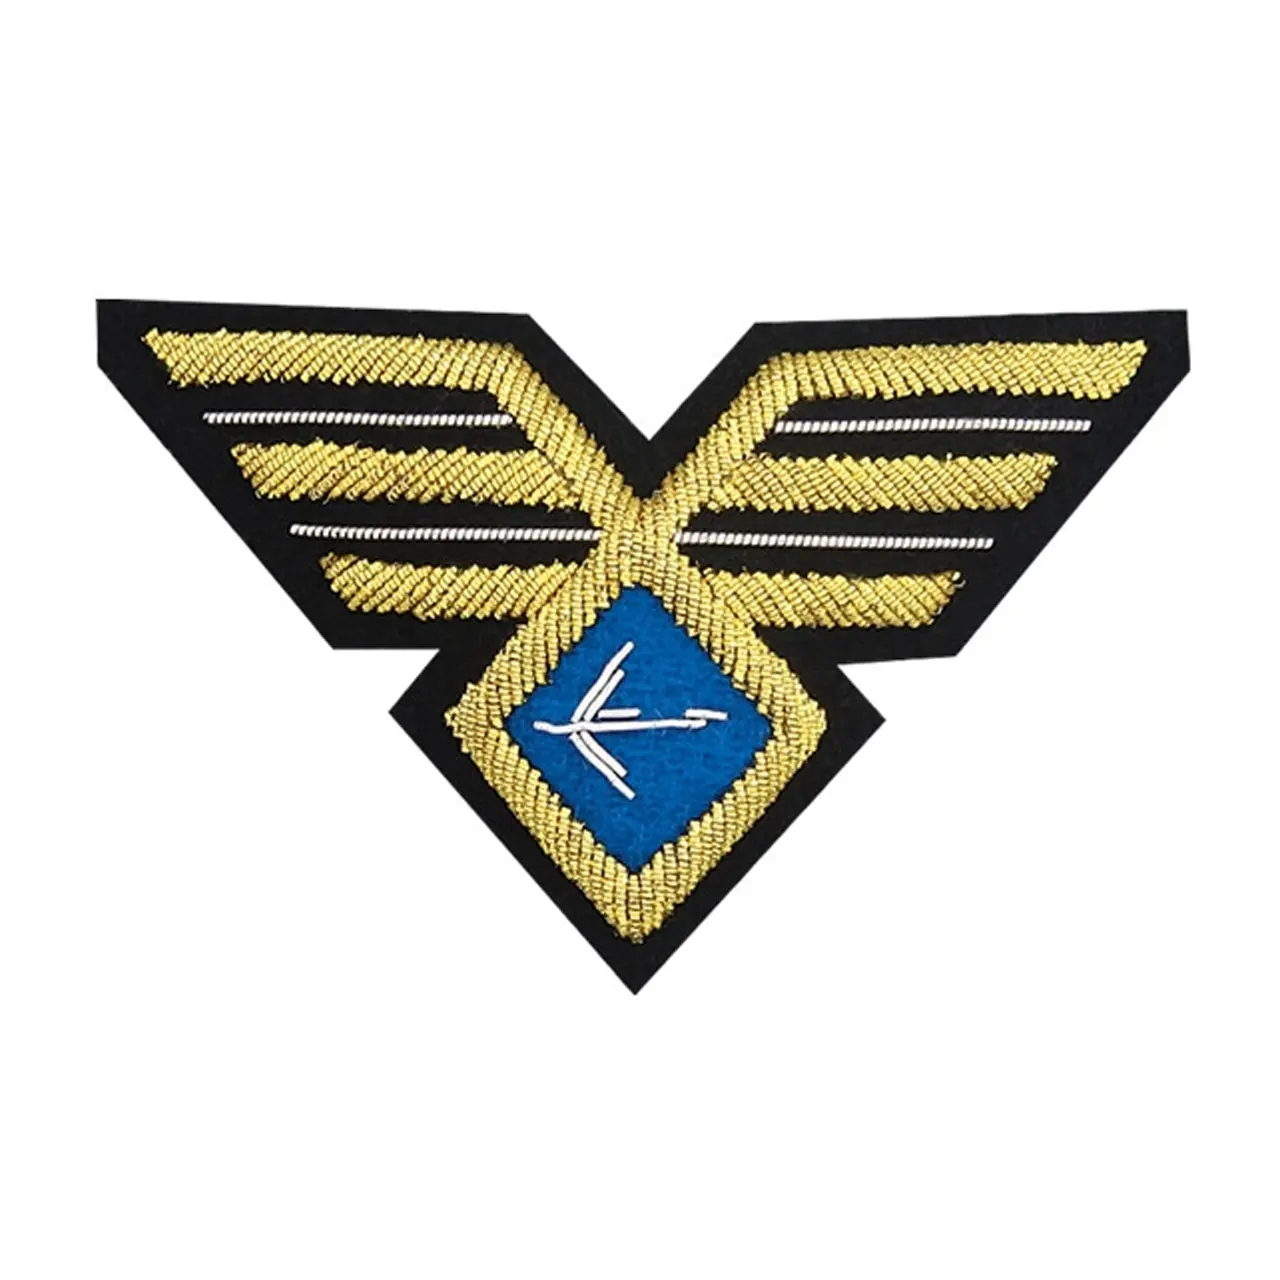 Bullion Embroidered Wings Hochwertige Goldbarren stickerei Golddraht Blazer Abzeichen Goldbarren Metalldraht